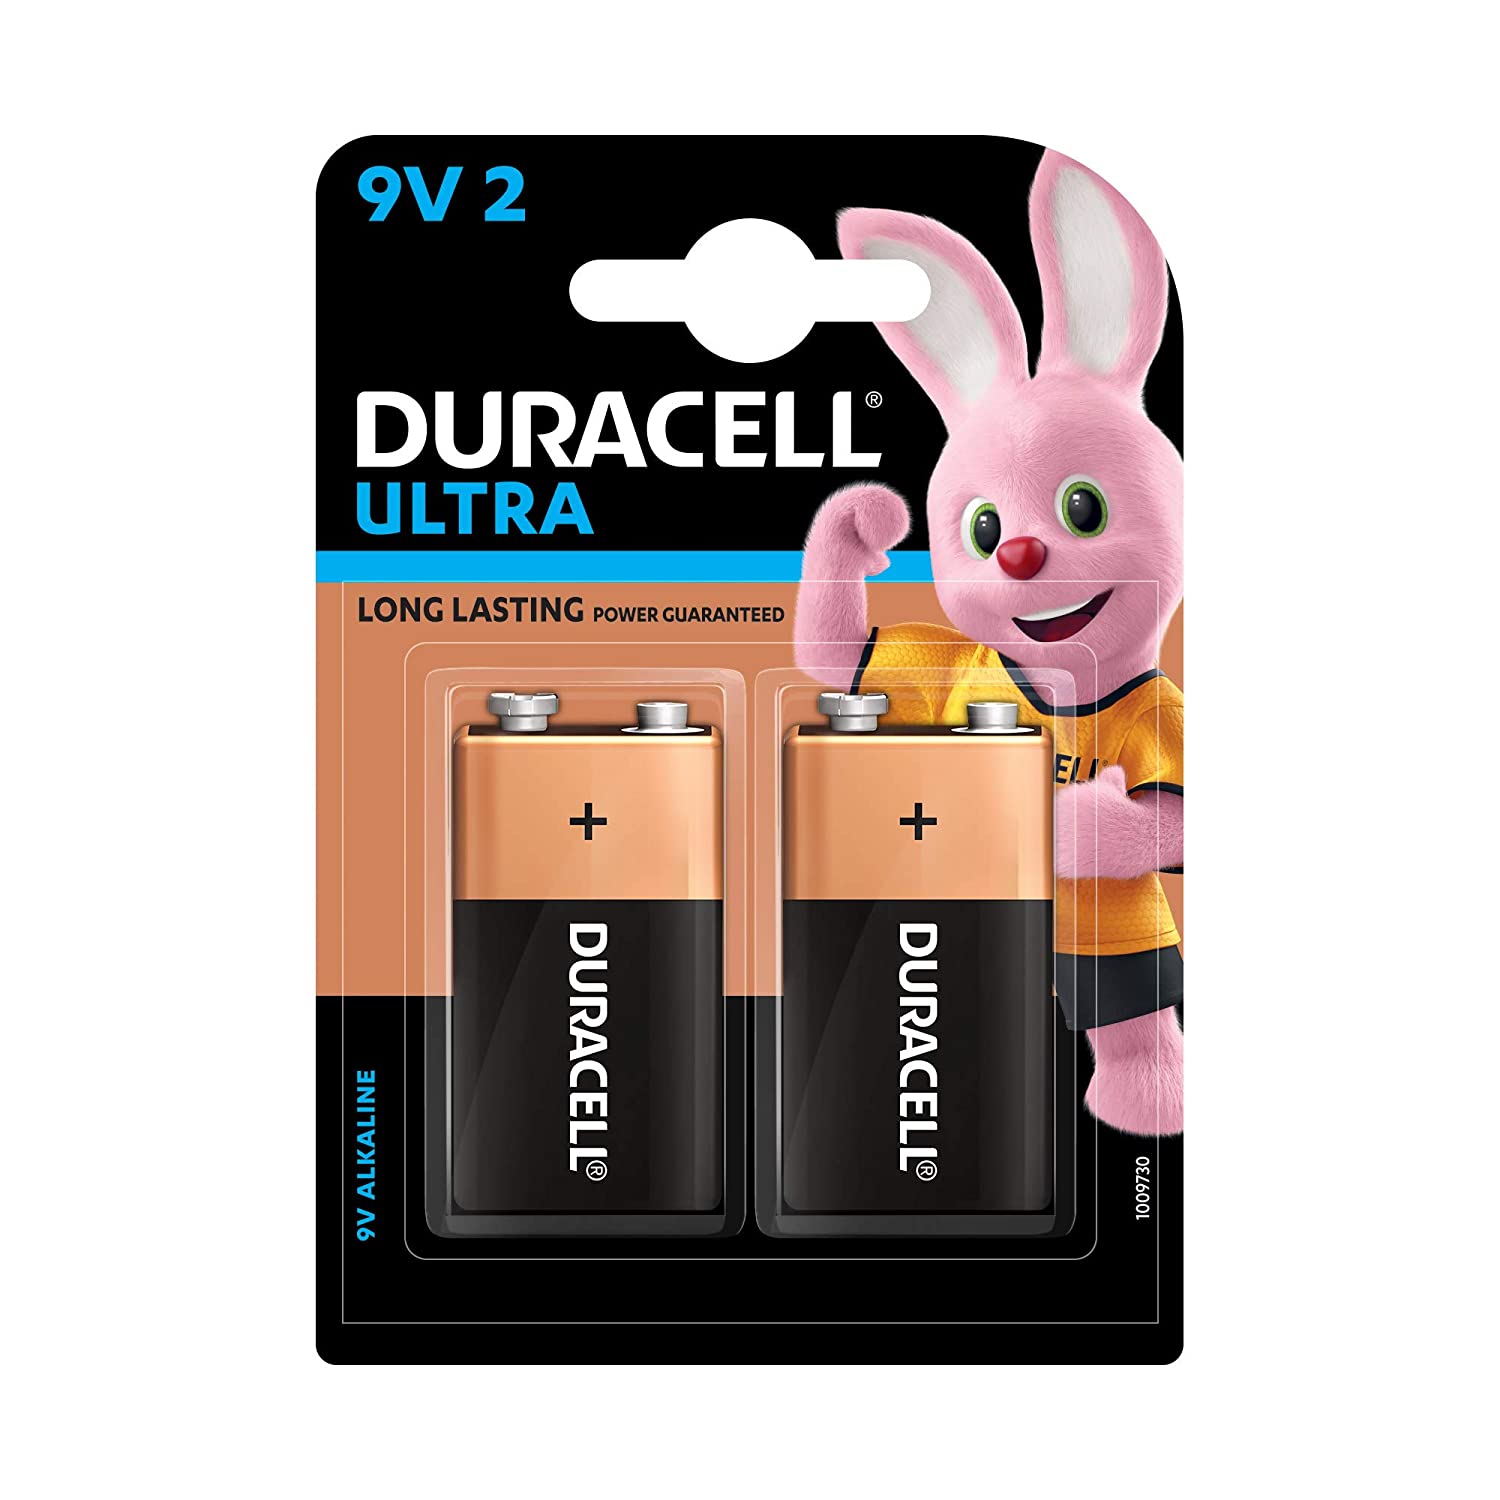 Duracell Ultra Alkaline 9V Battery, 2 Piece (Pack of 2)